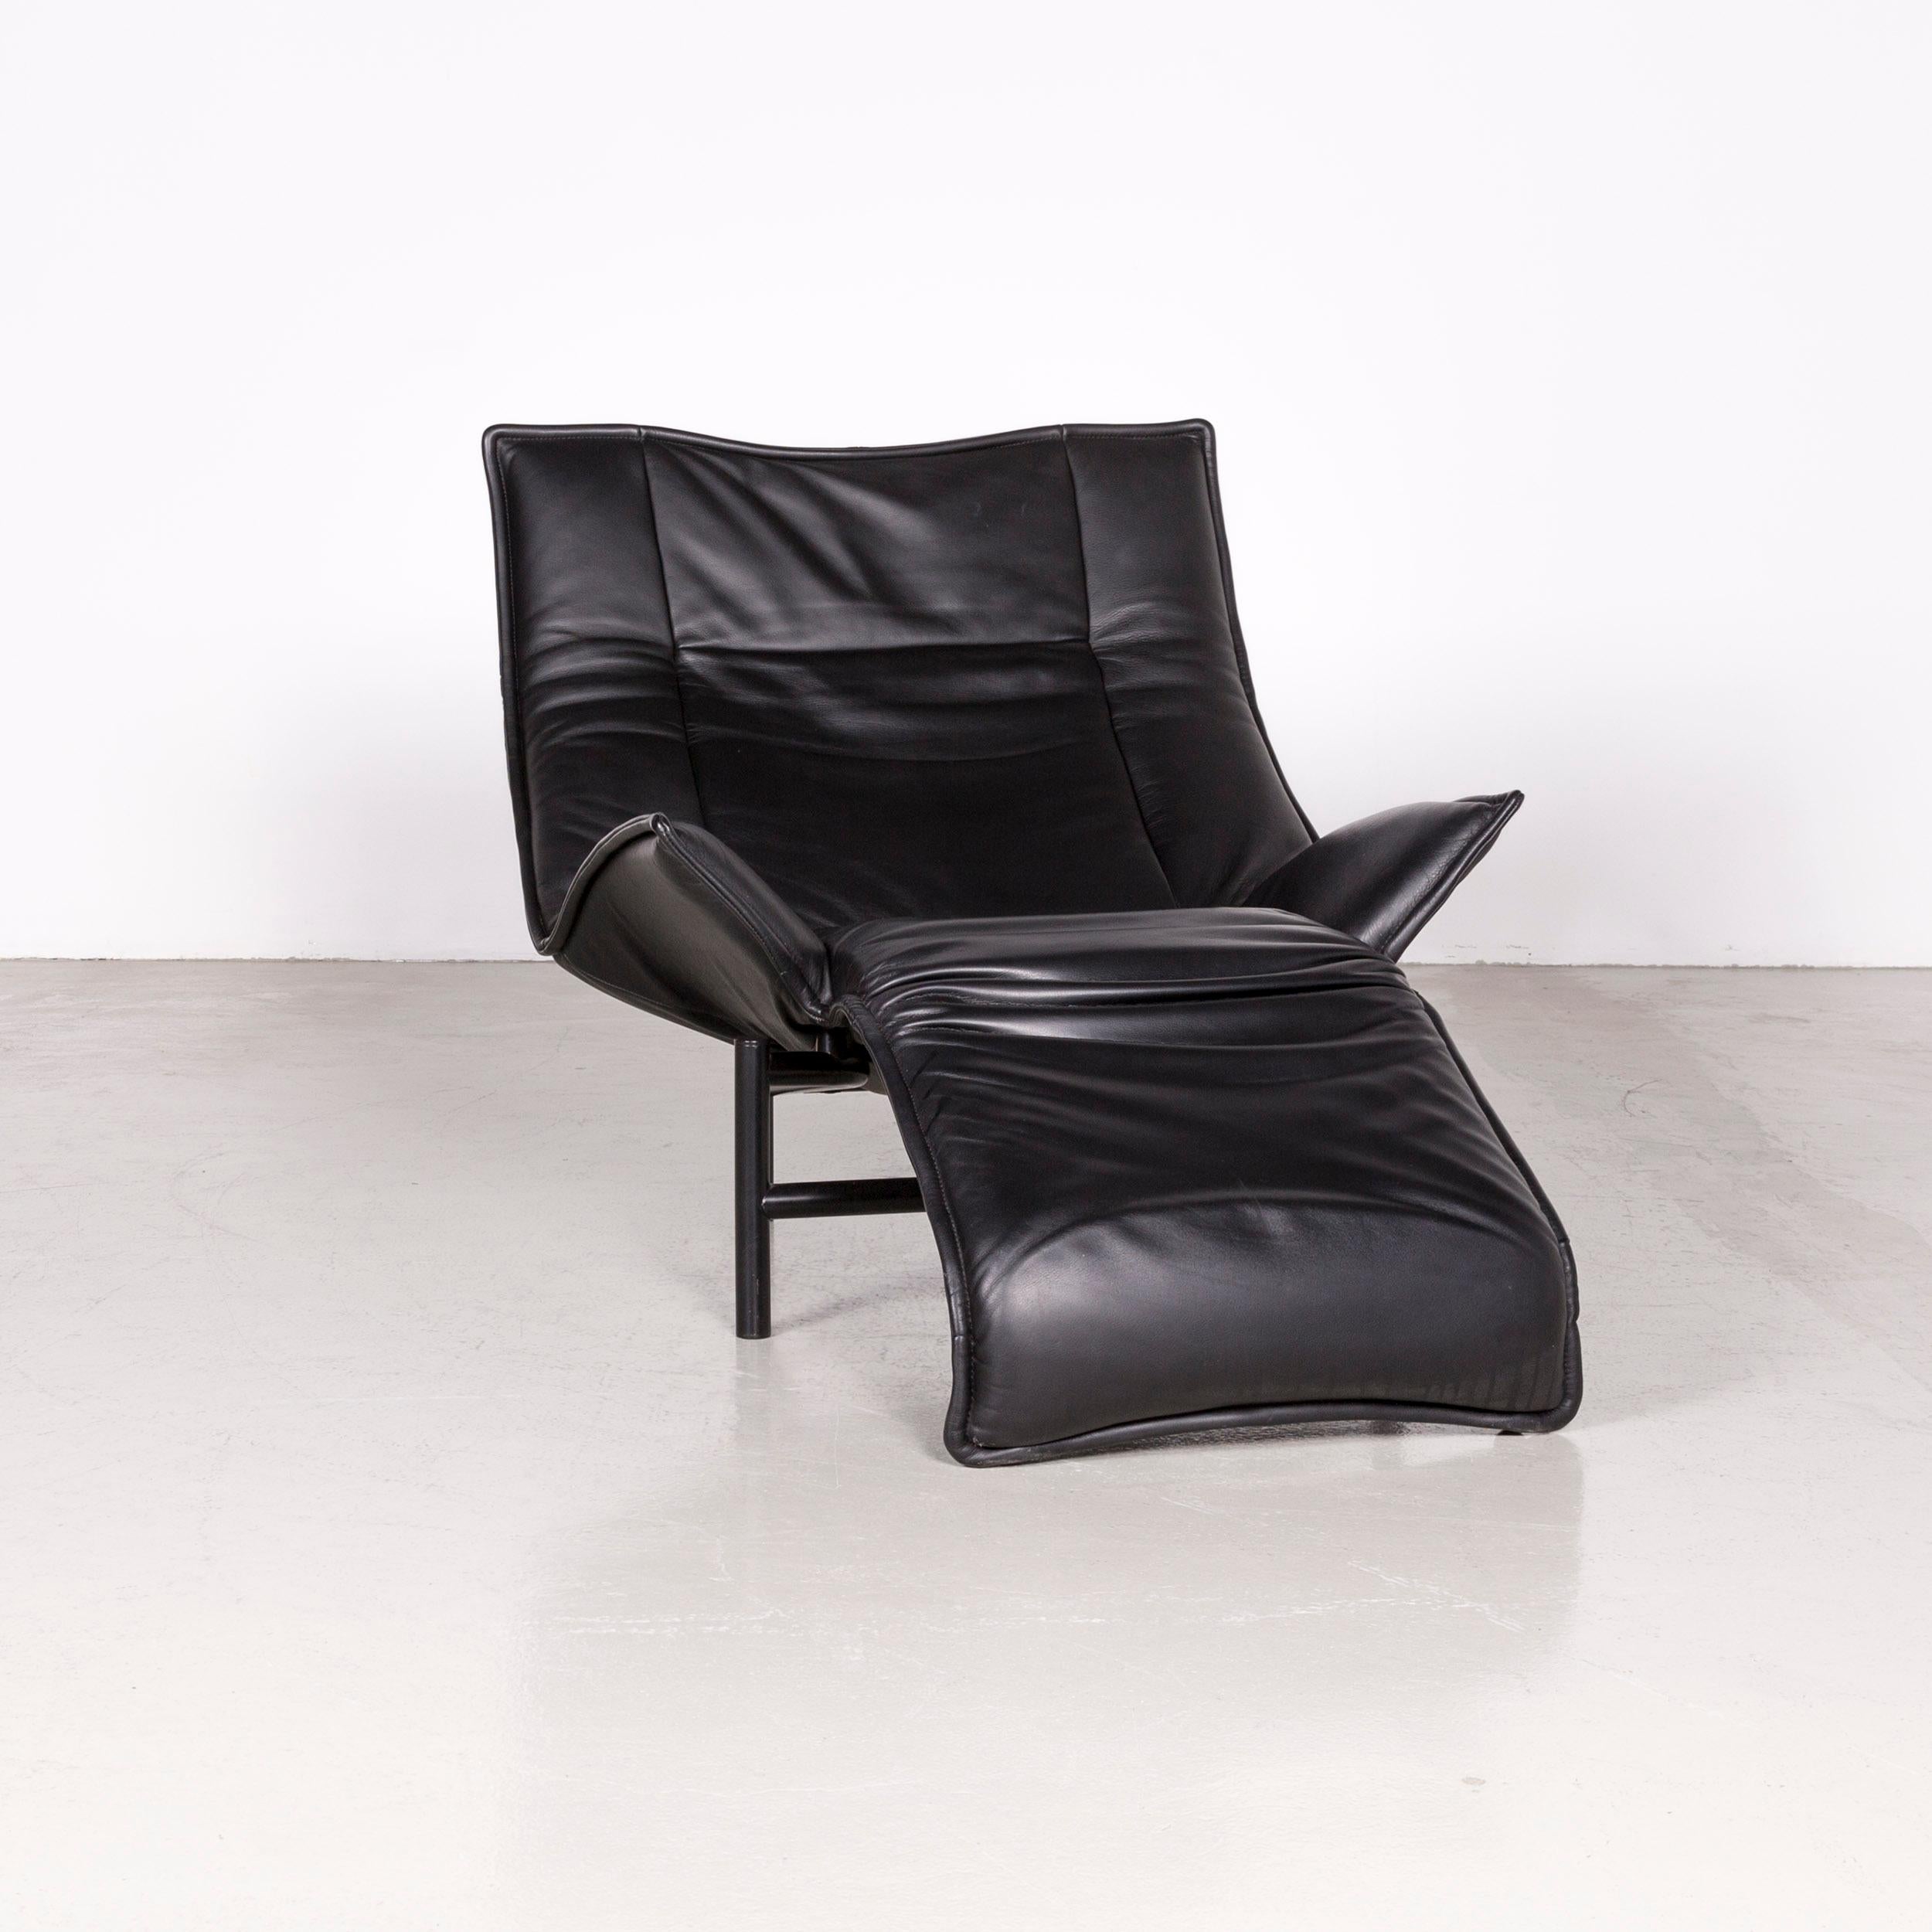 Cassina Veranda Designer Leather Armchair in Black Recliner Function In Good Condition For Sale In Cologne, DE